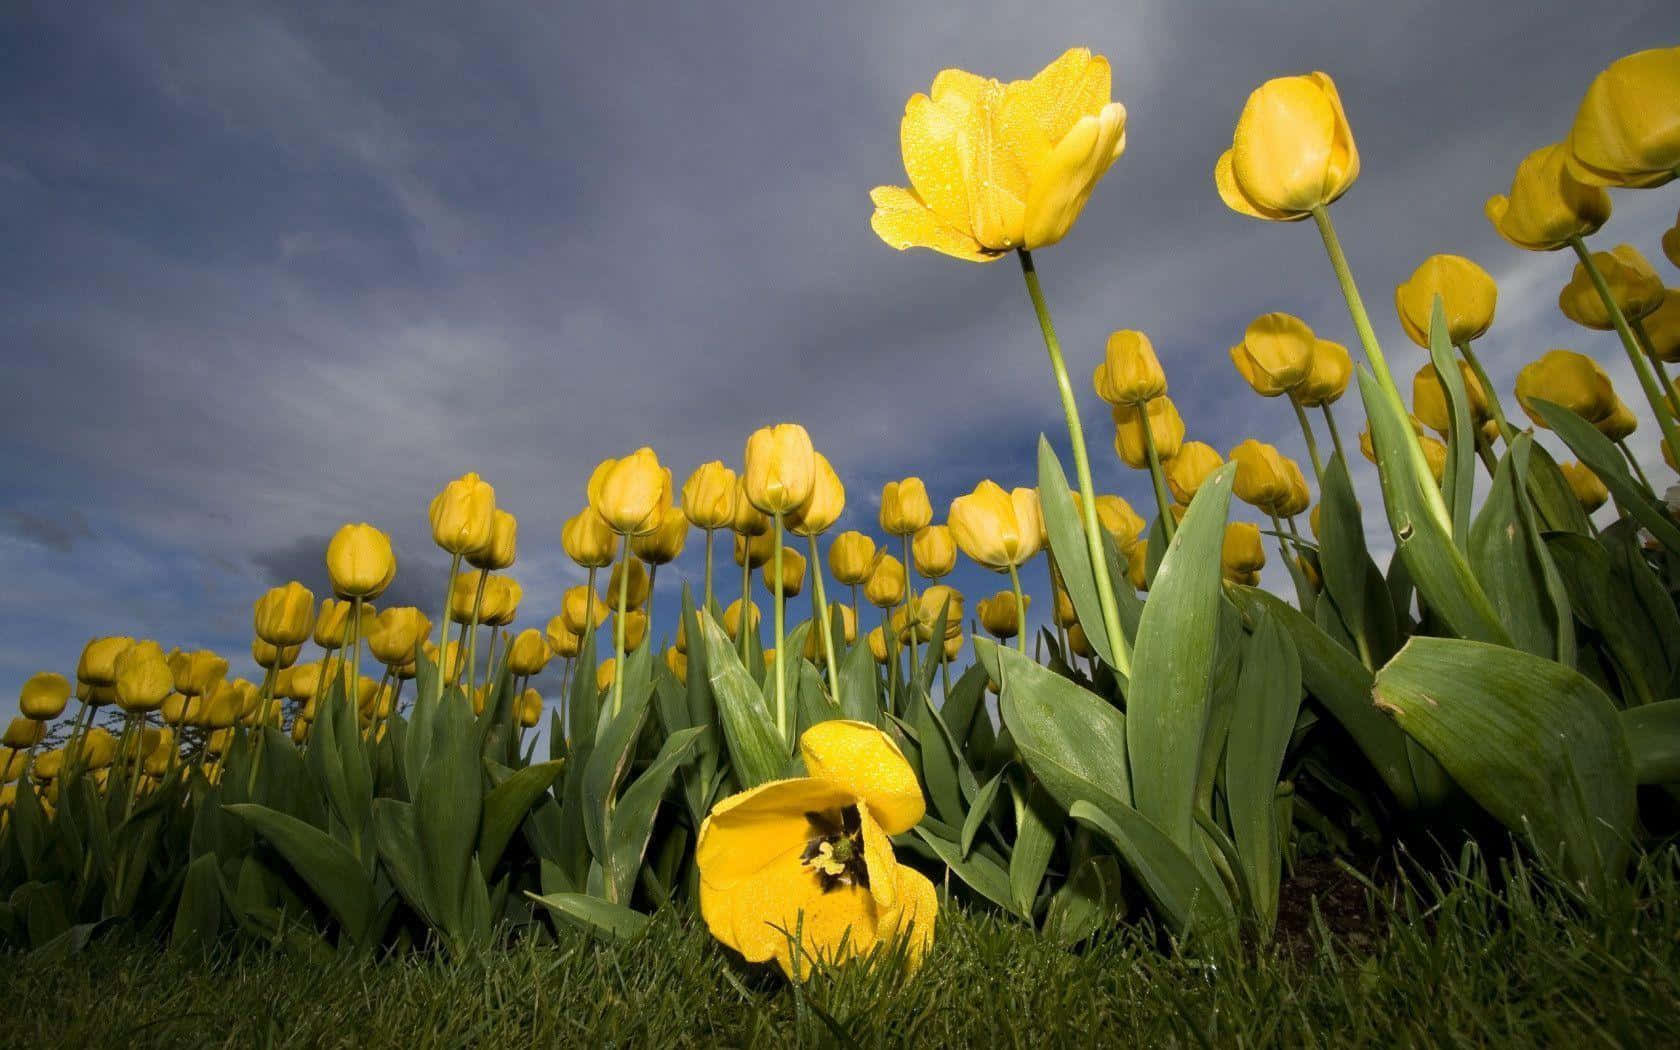 Vibrant_ Yellow_ Tulips_ Under_ Stormy_ Skies.jpg Wallpaper